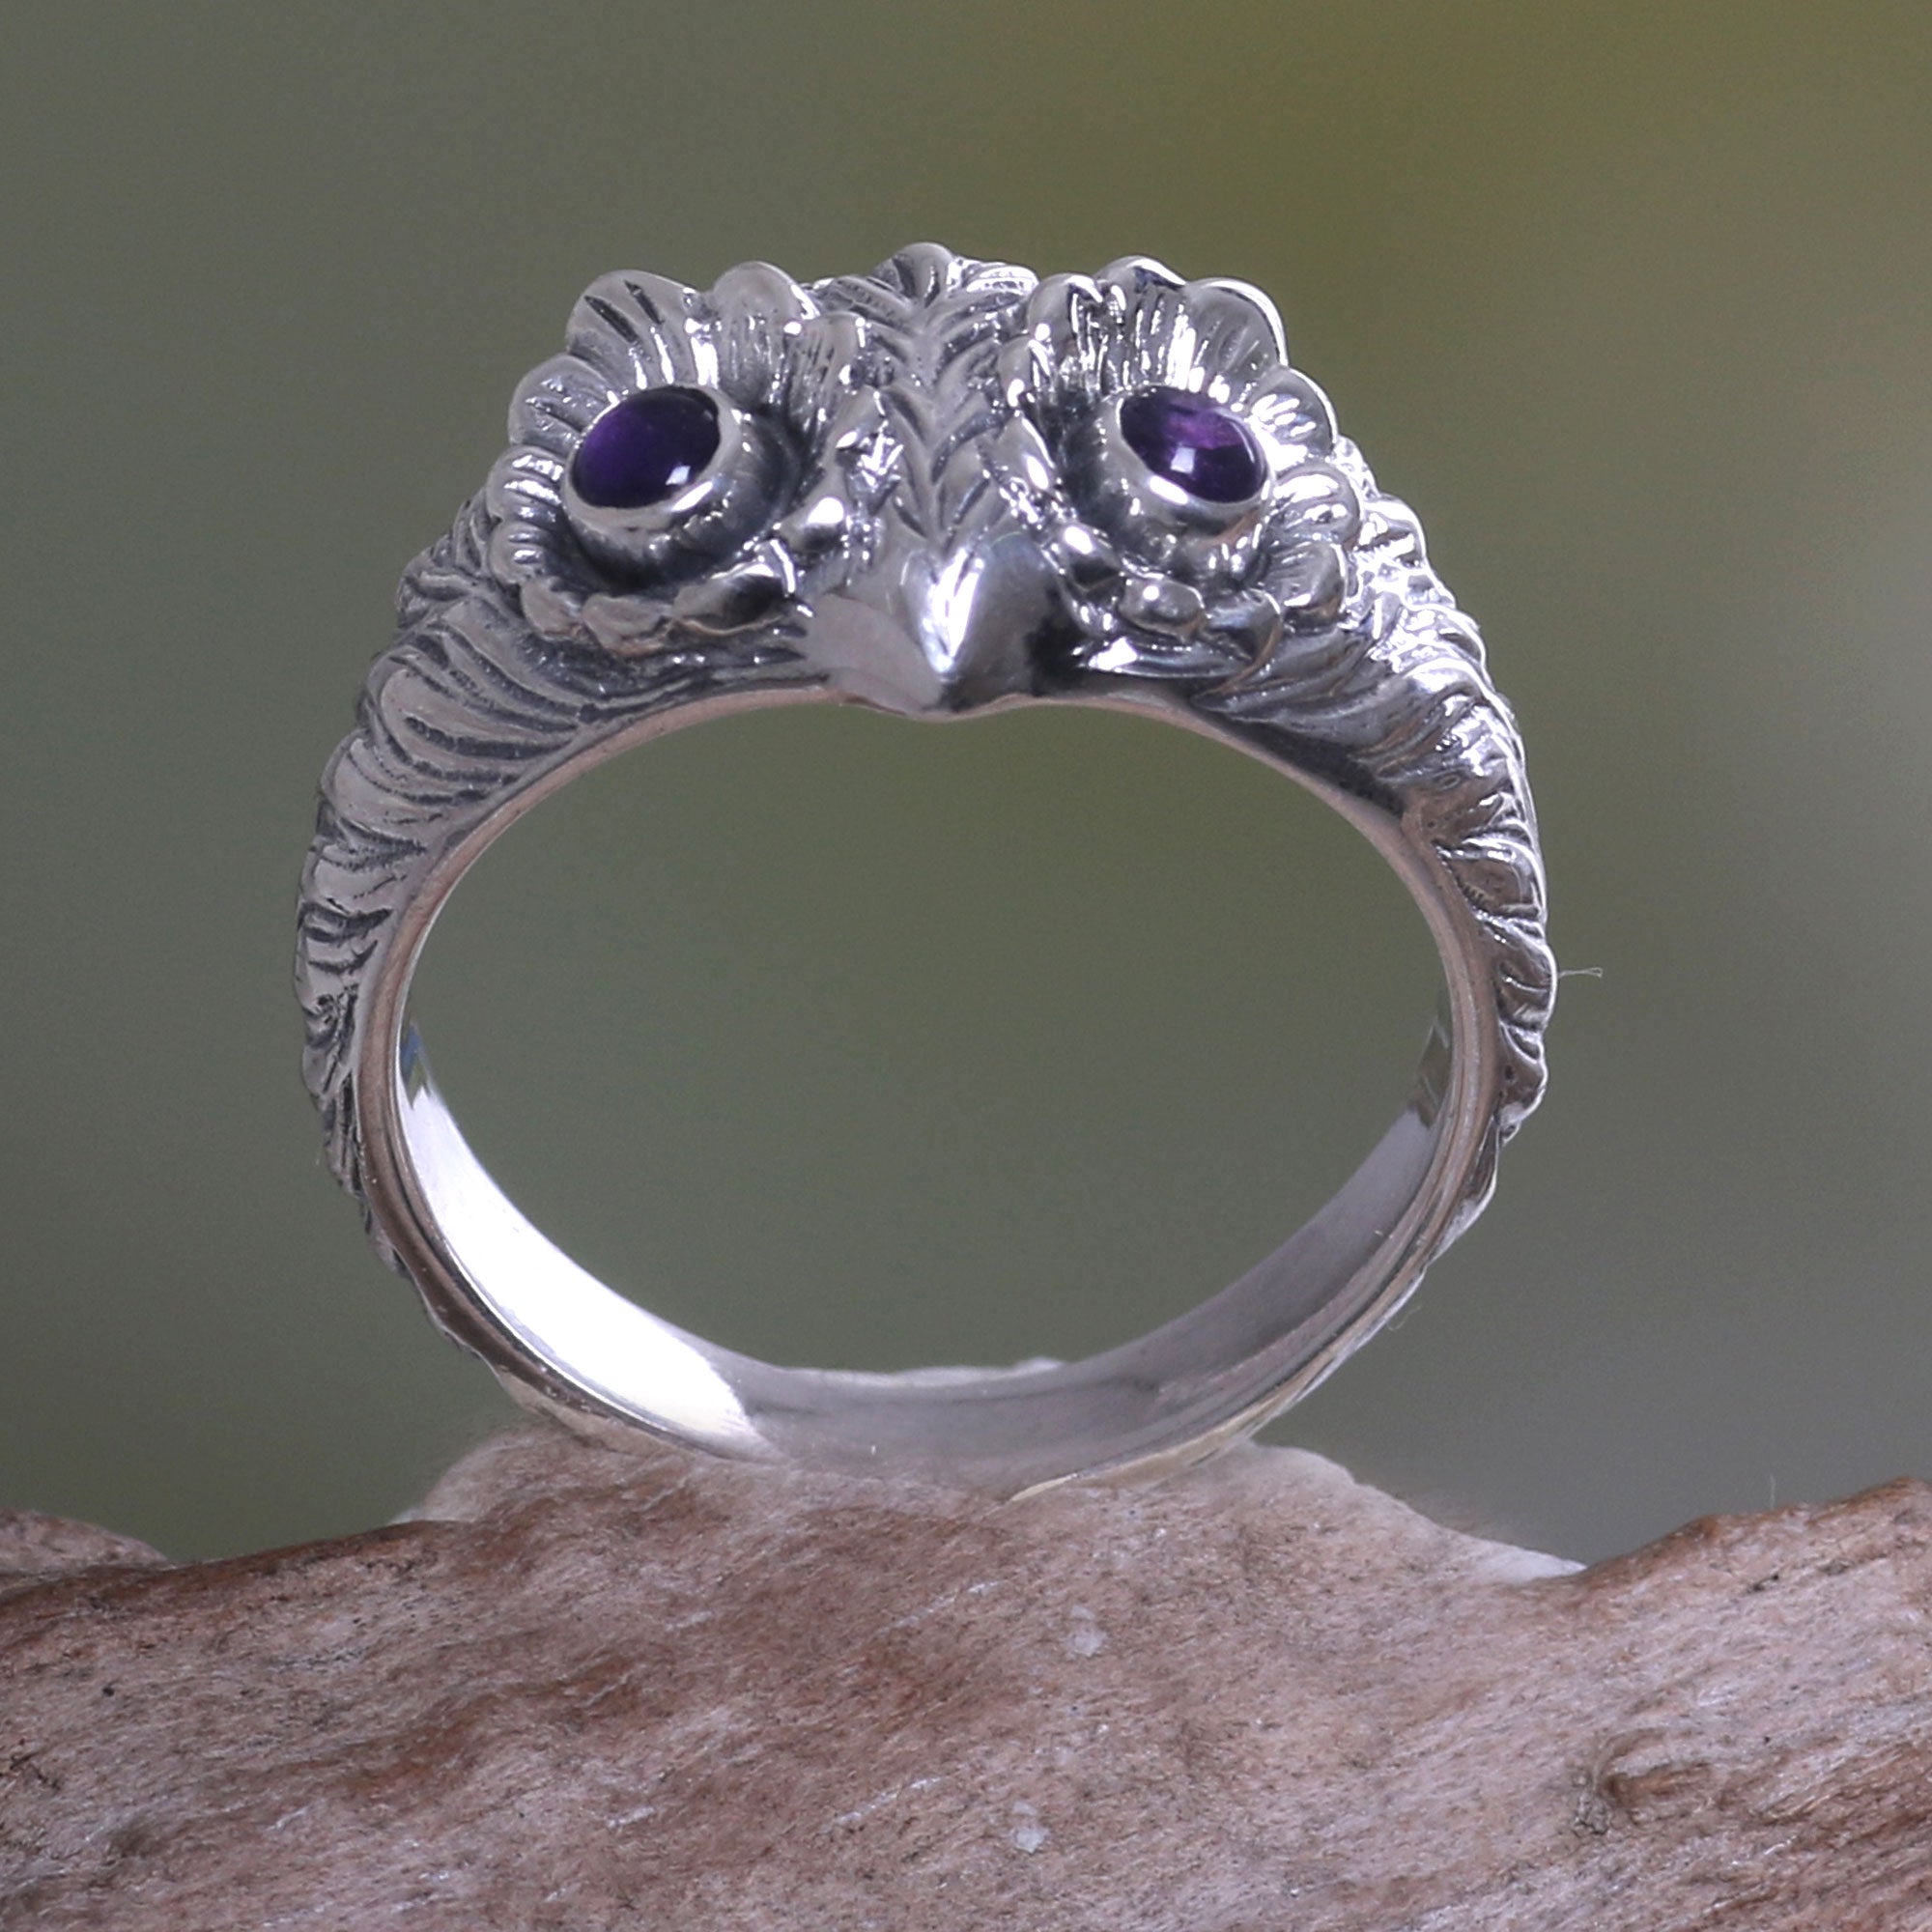 NOVICA Owl Wisdom Amethyst & Silver Band Ring - Size 10